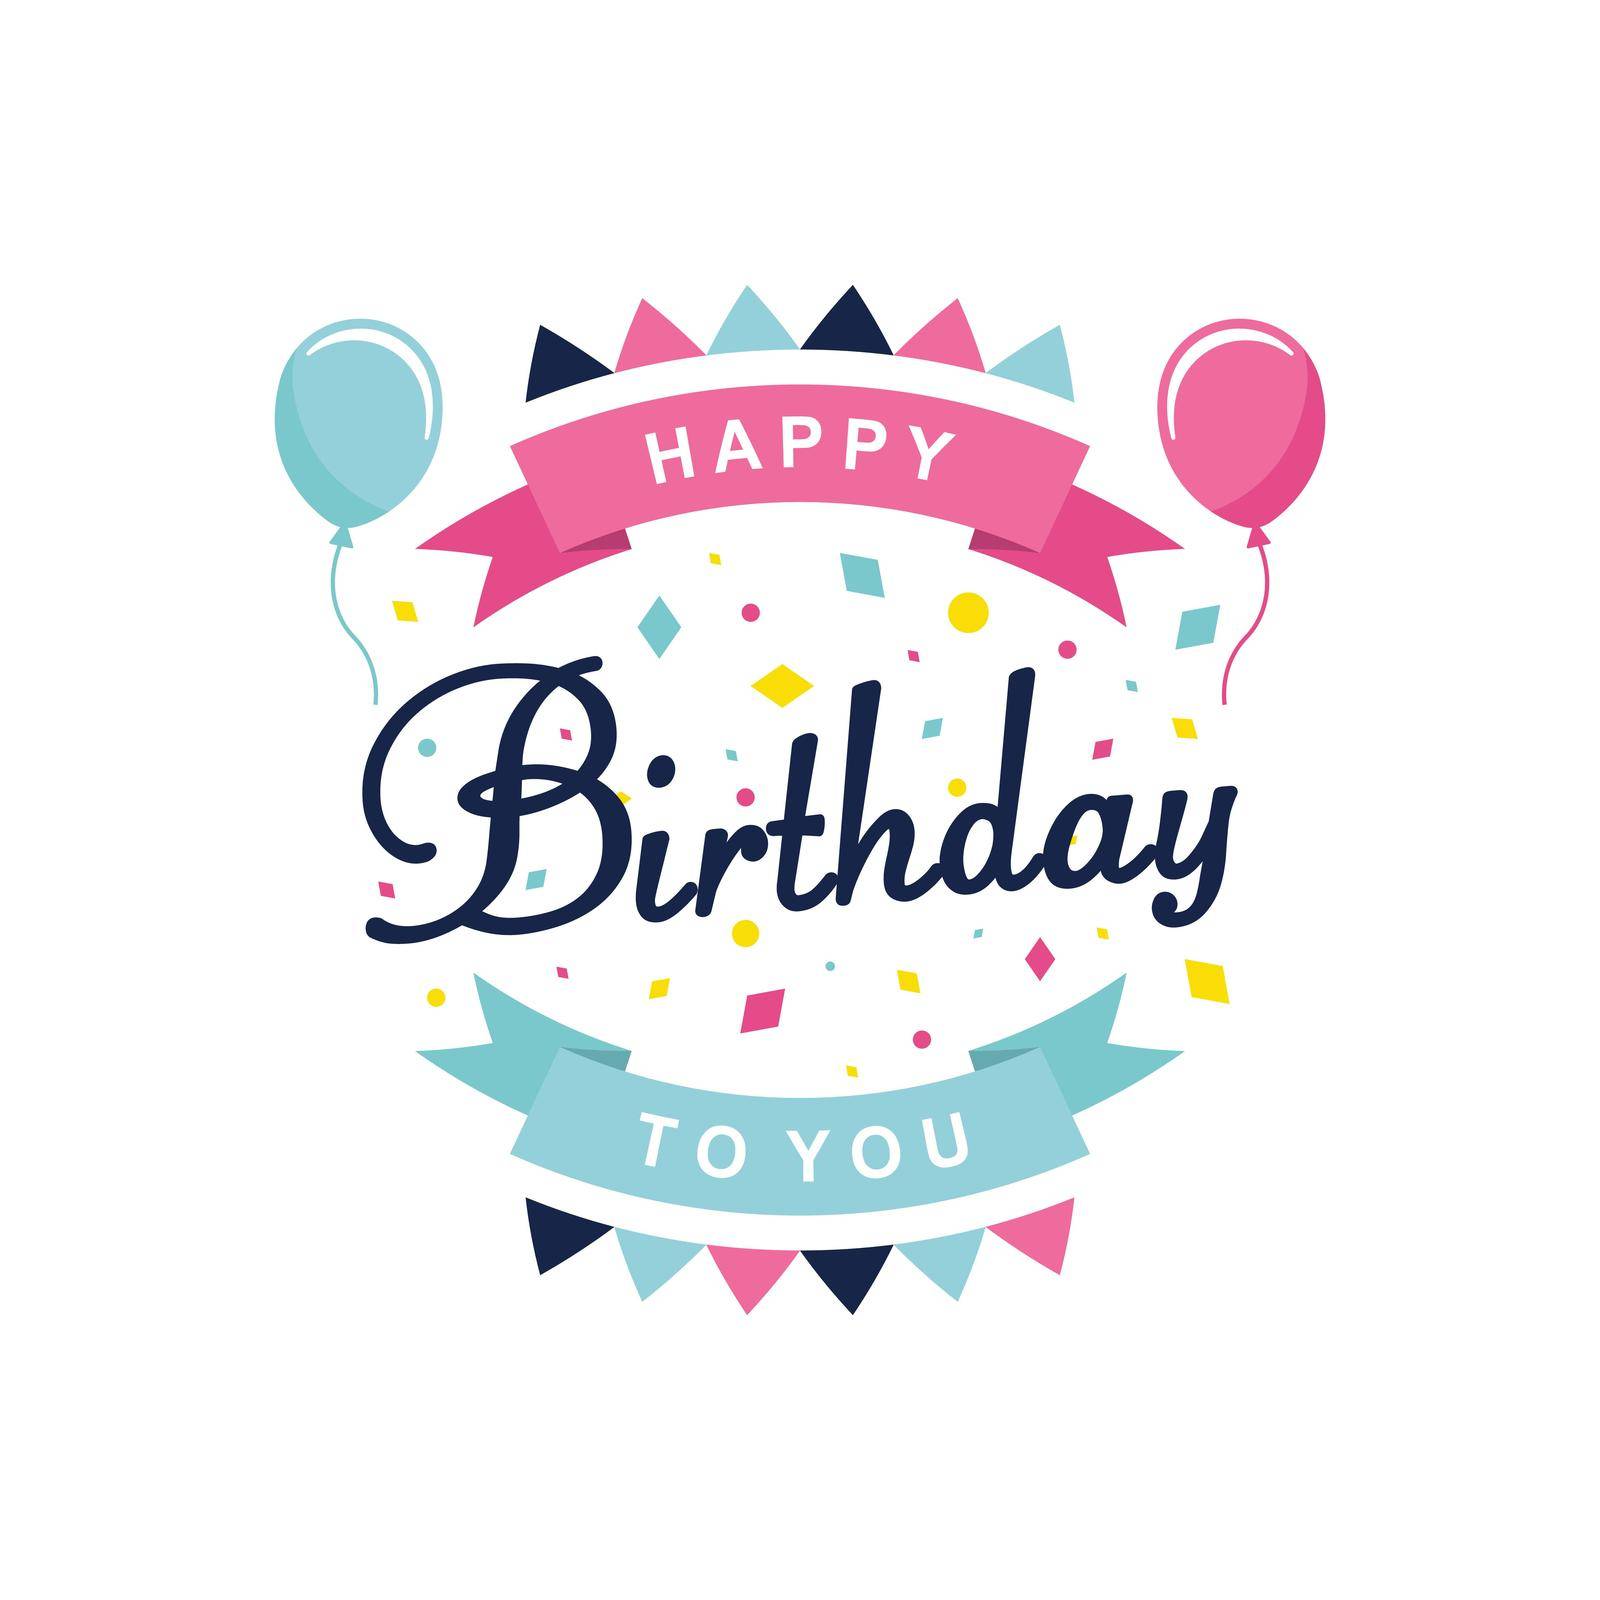 Happy Birthday vector illustration. Happy Birthday text with balloons EPS10